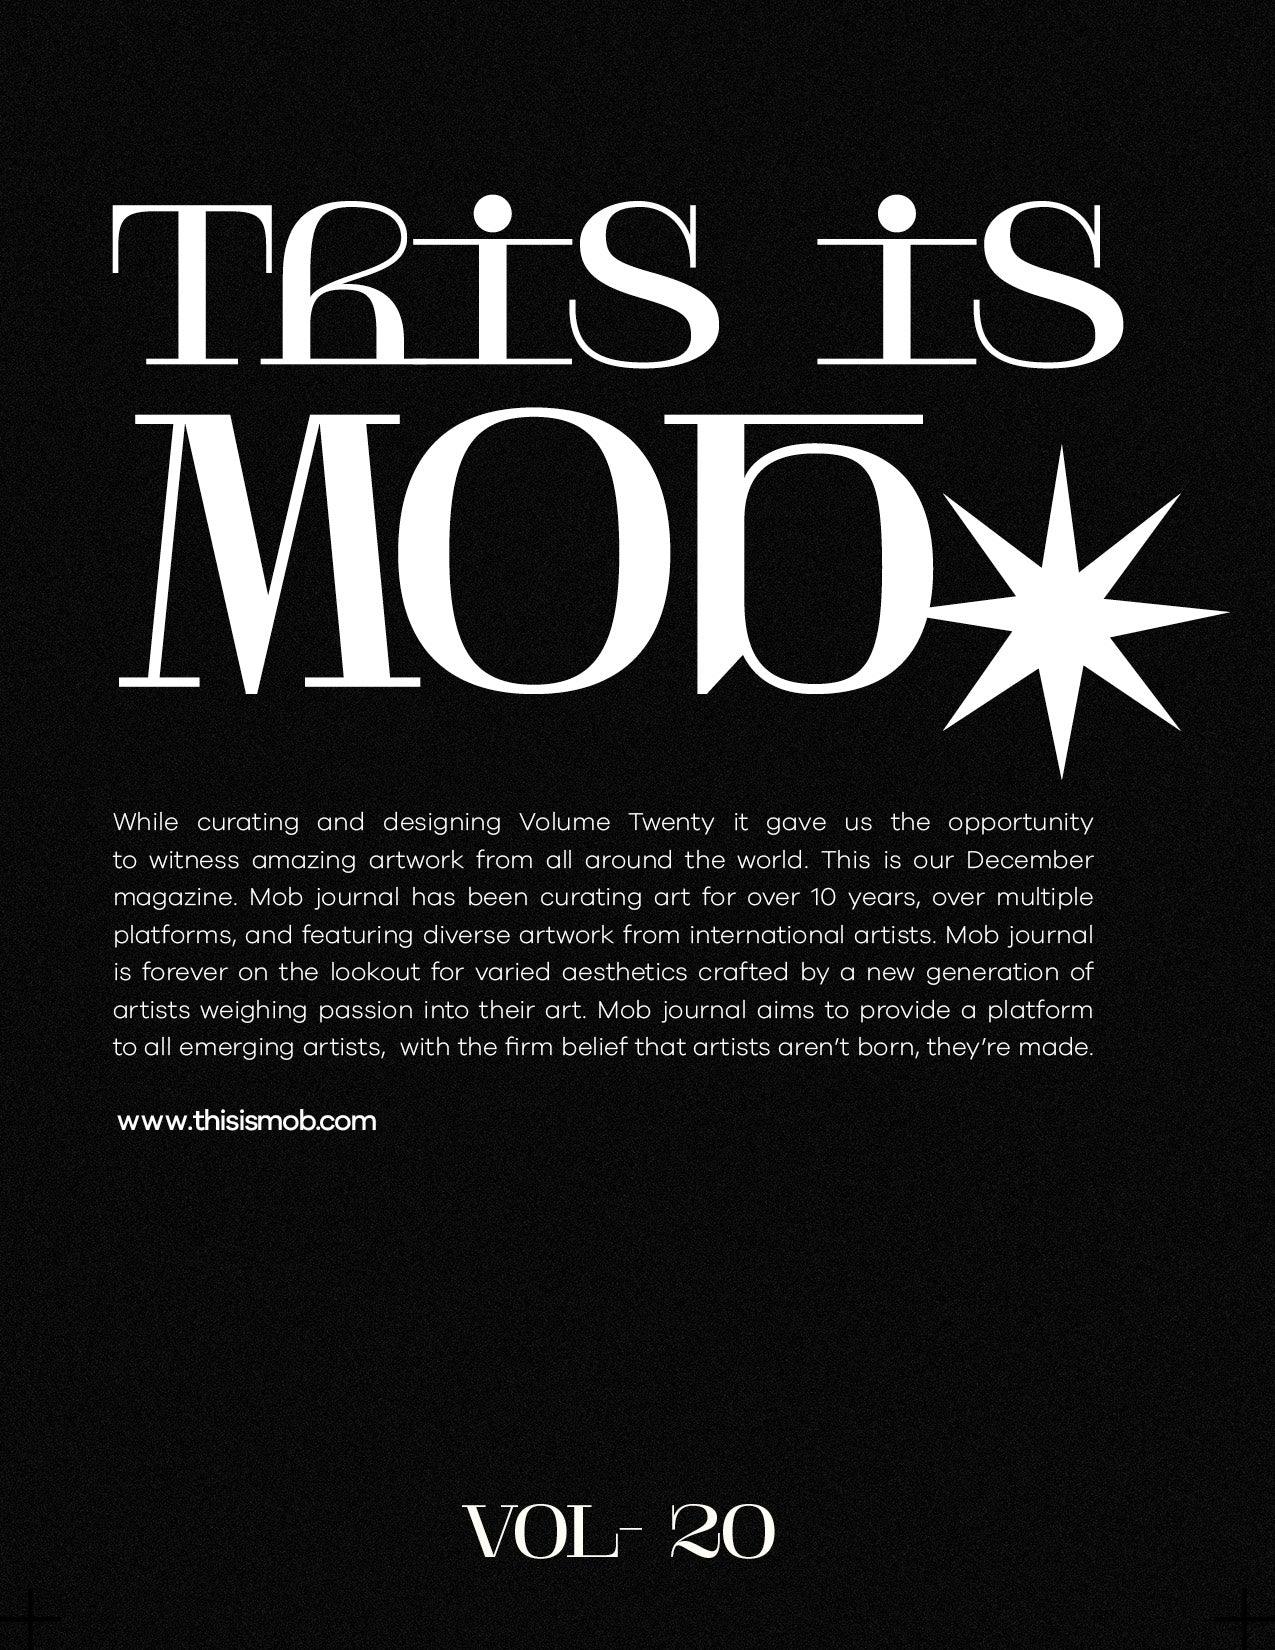 MOB JOURNAL | VOLUME TWENTY | ISSUE #19 - Mob Journal